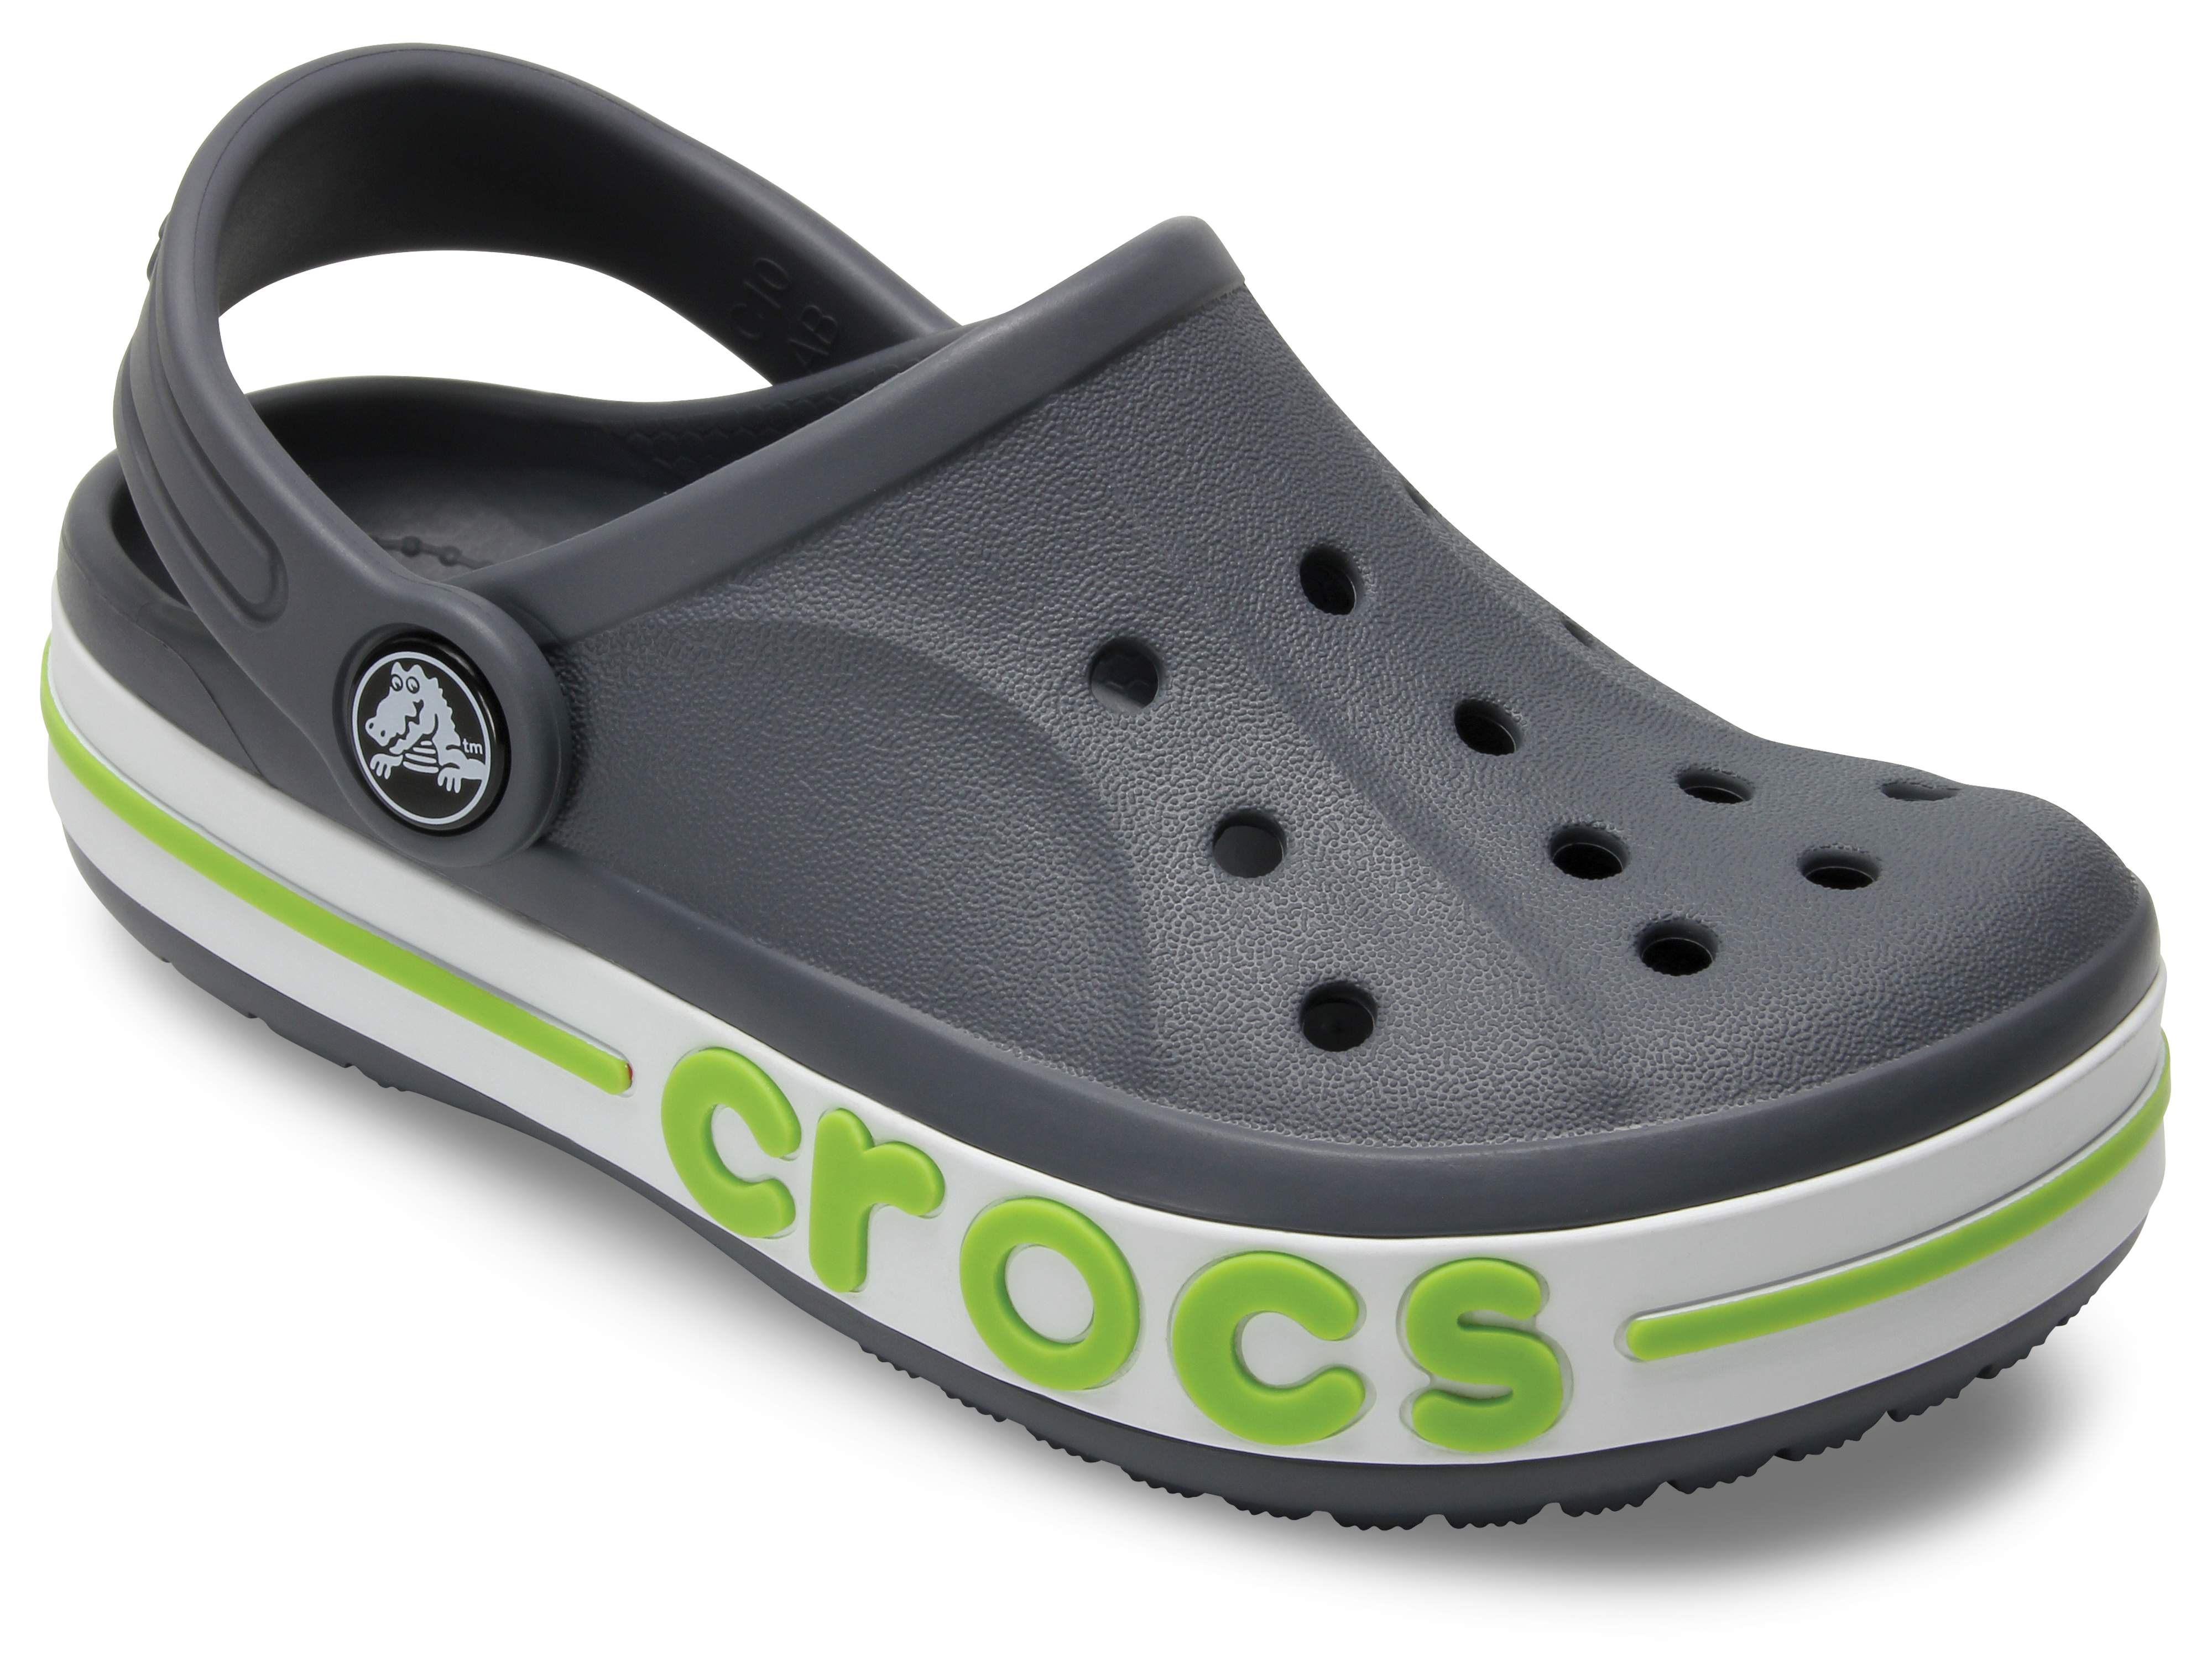 kids white crocs